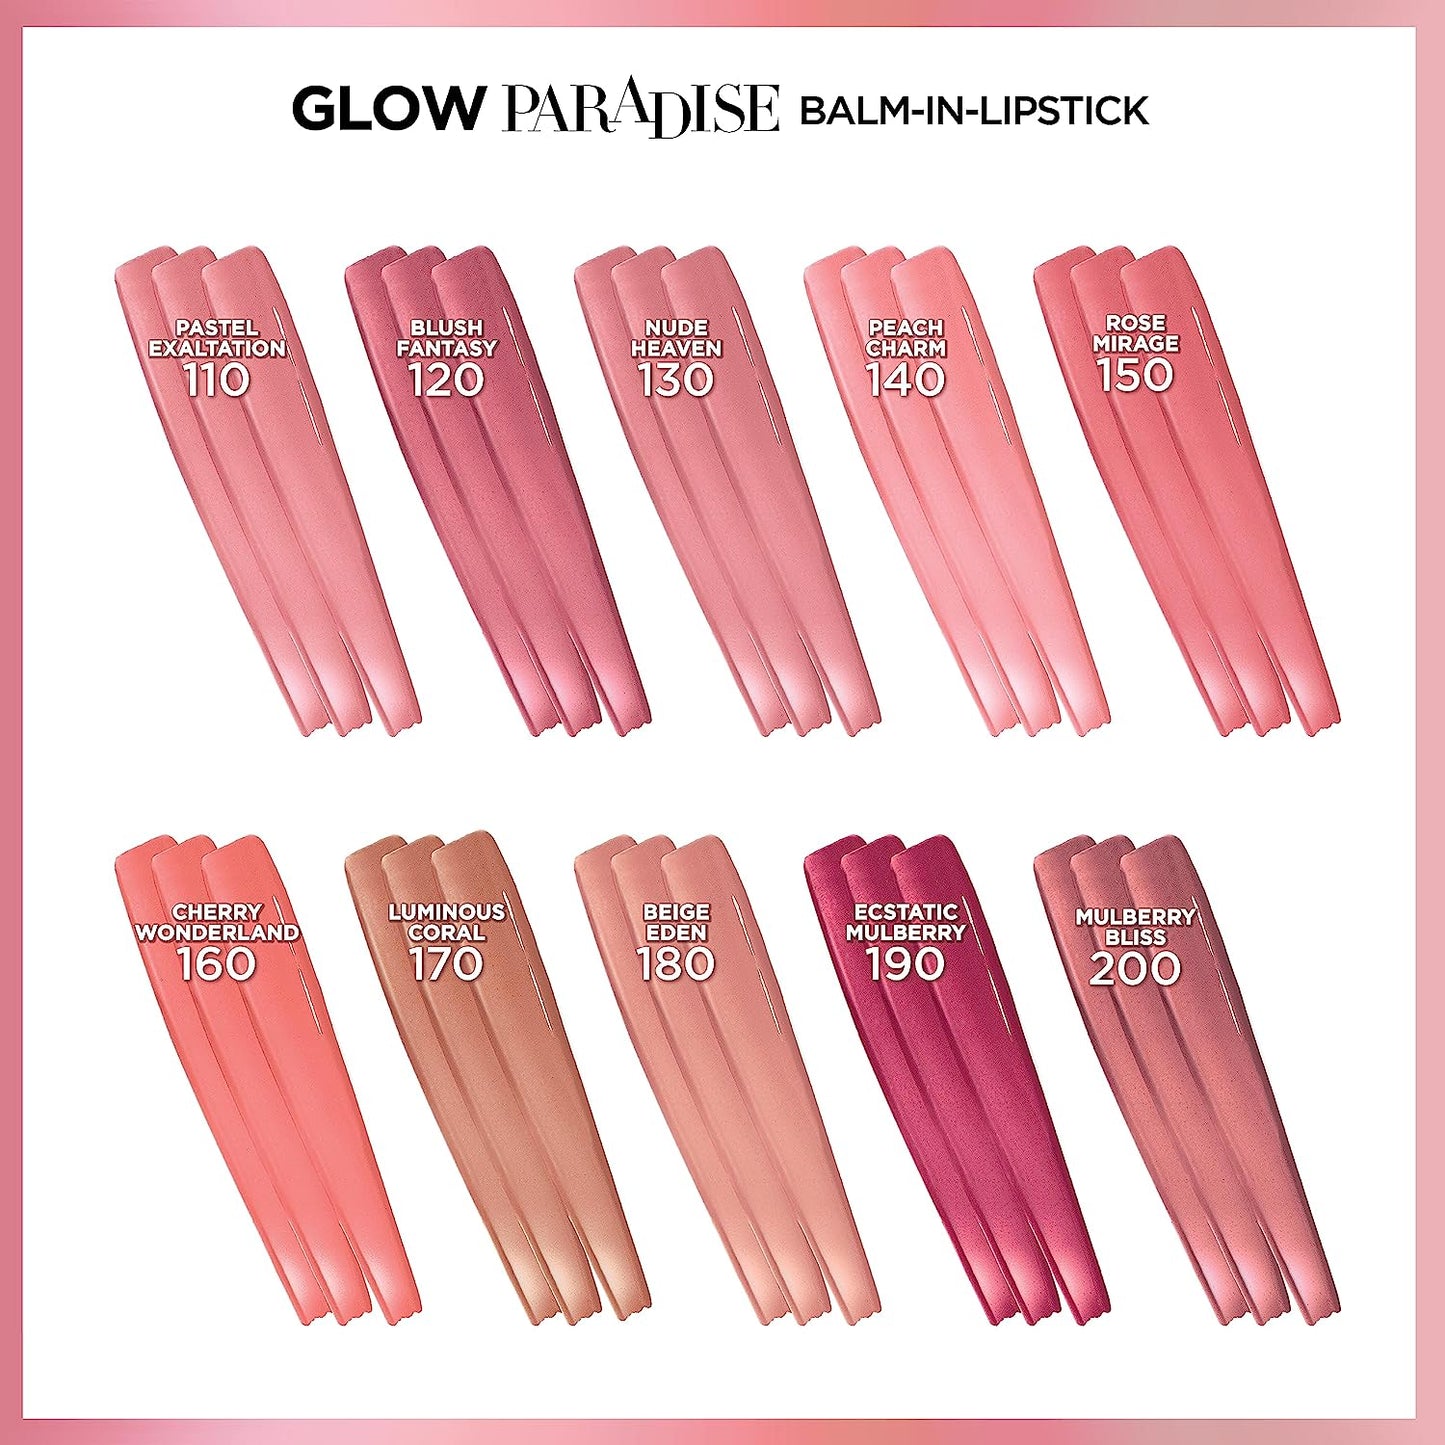 L'Oréal Glow Paradise Balm-In-Lipstick | 150 Rose Mirage